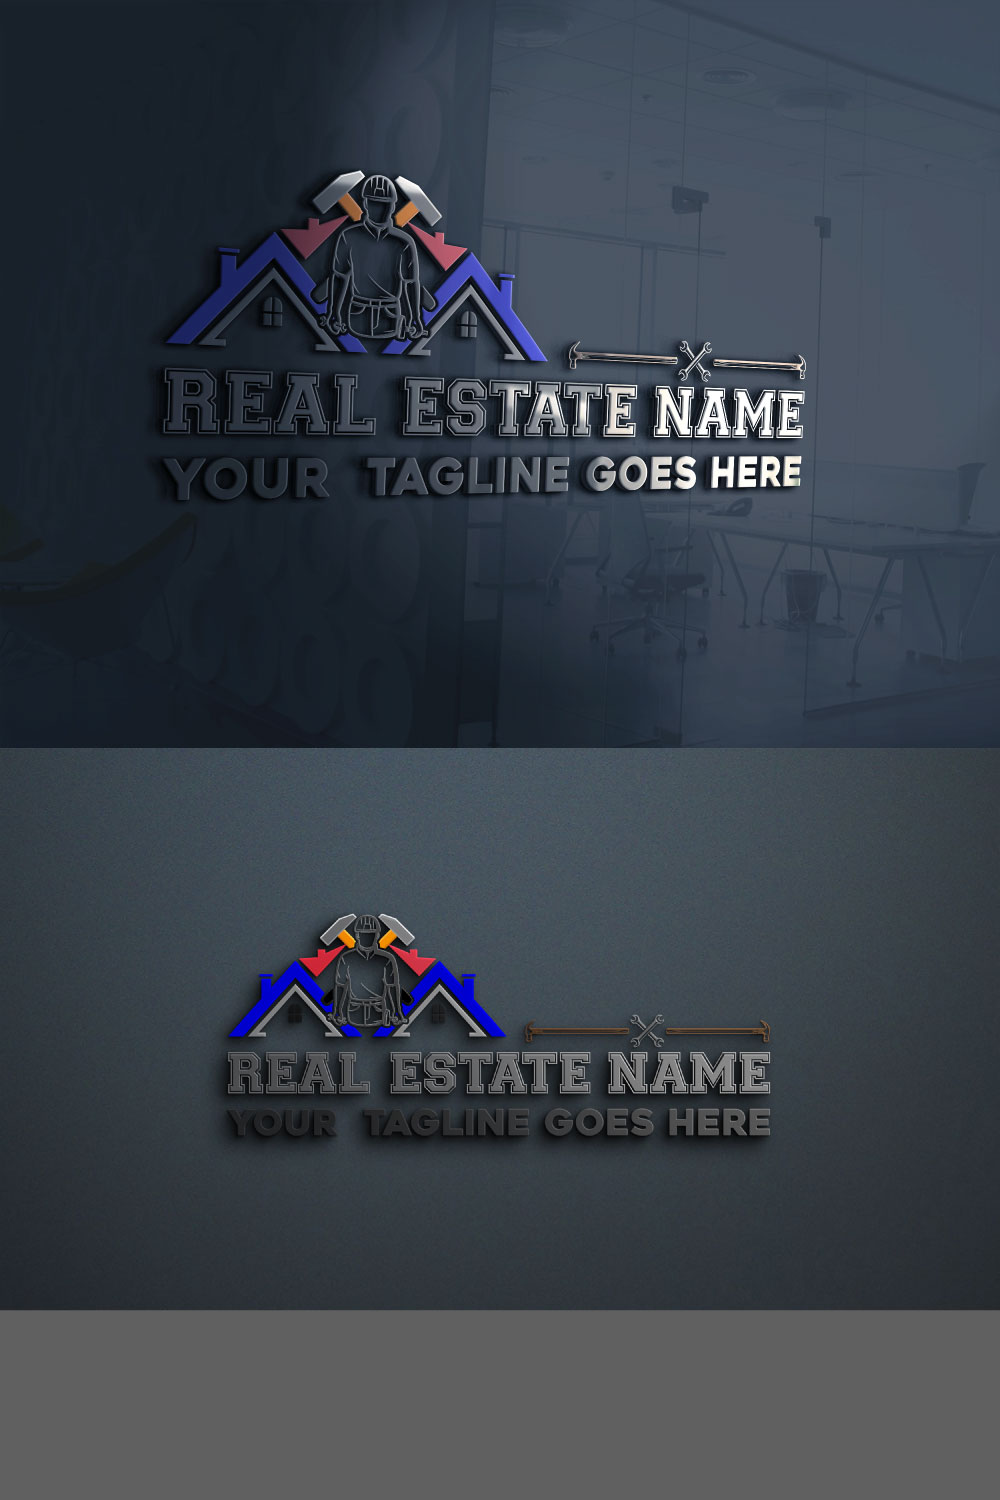 Real estate logo design pinterest preview image.